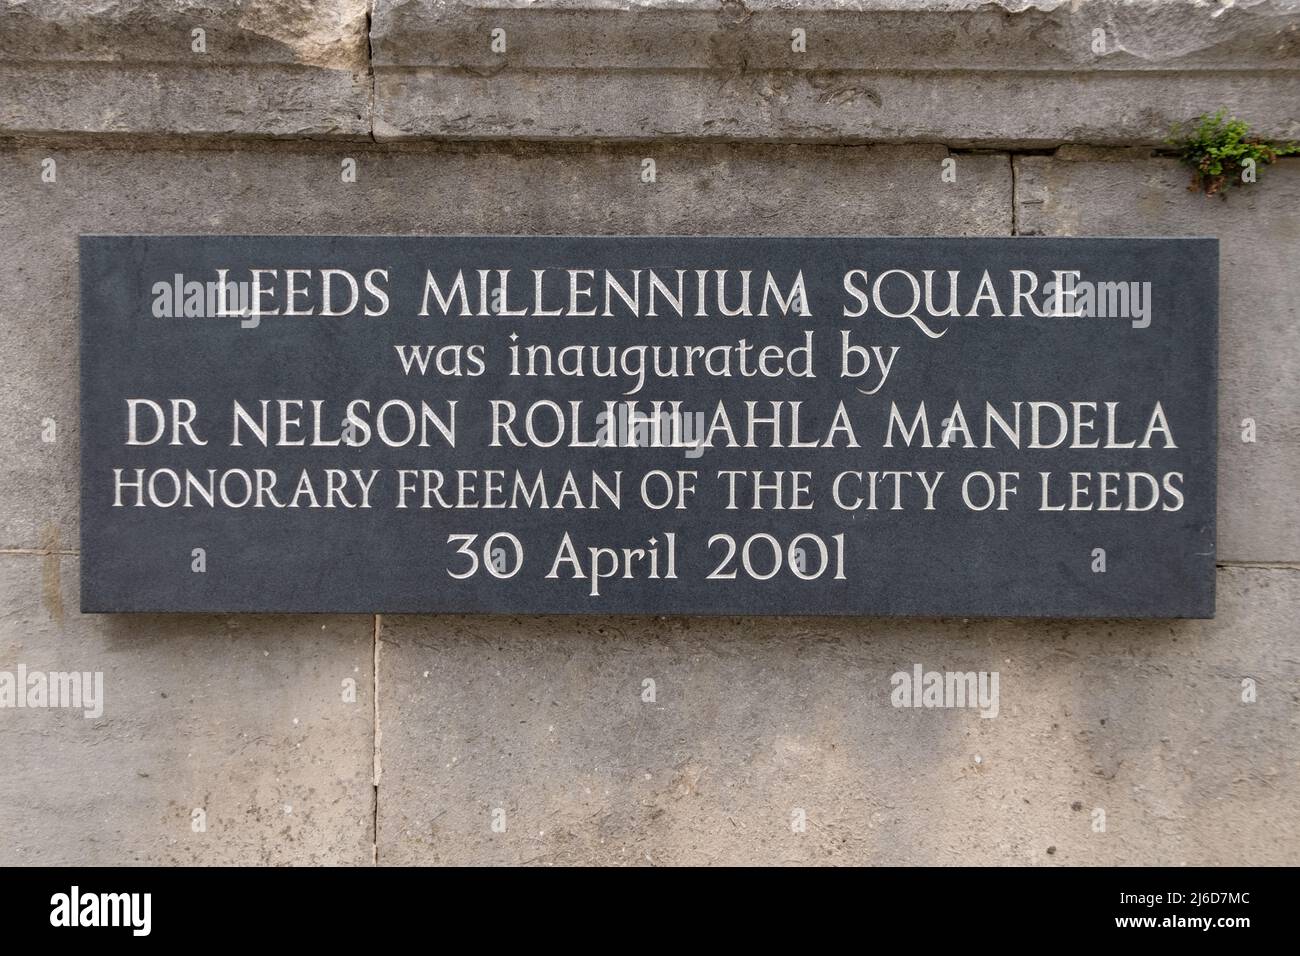 Leeds Millennium Square was inaugurated by Dr Nelson Rolihlahla Mandela Honarary freeman of the city of Leeds 30 April 2001 sign, Leeds, UK Stock Photo